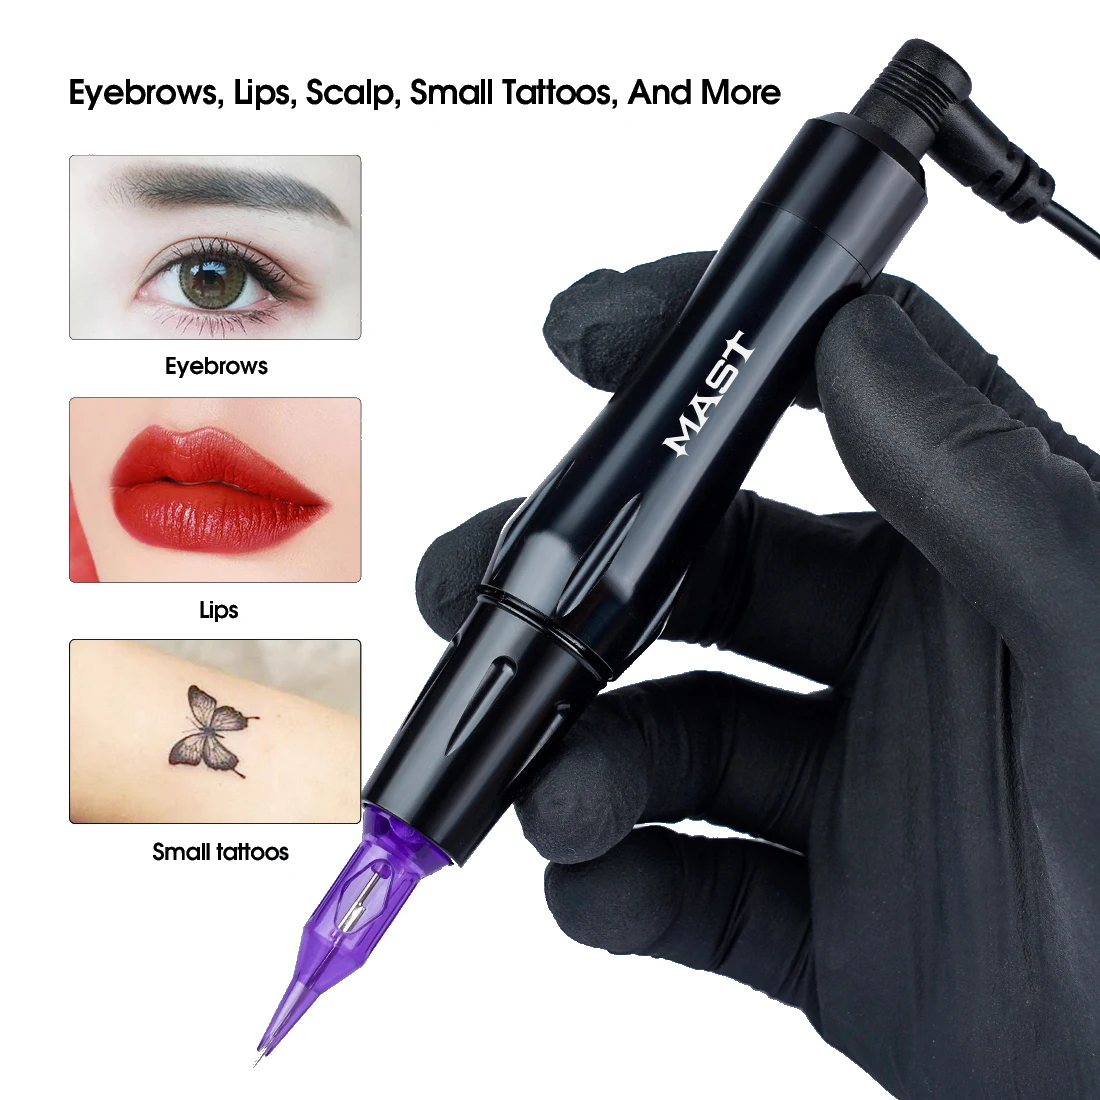 Mast P30 Eyebrow Lips Tattoo Pen RCA Drive 3.6mm Stroke Permanent Makeup Machine Dragonhawk Tattoo Supplies